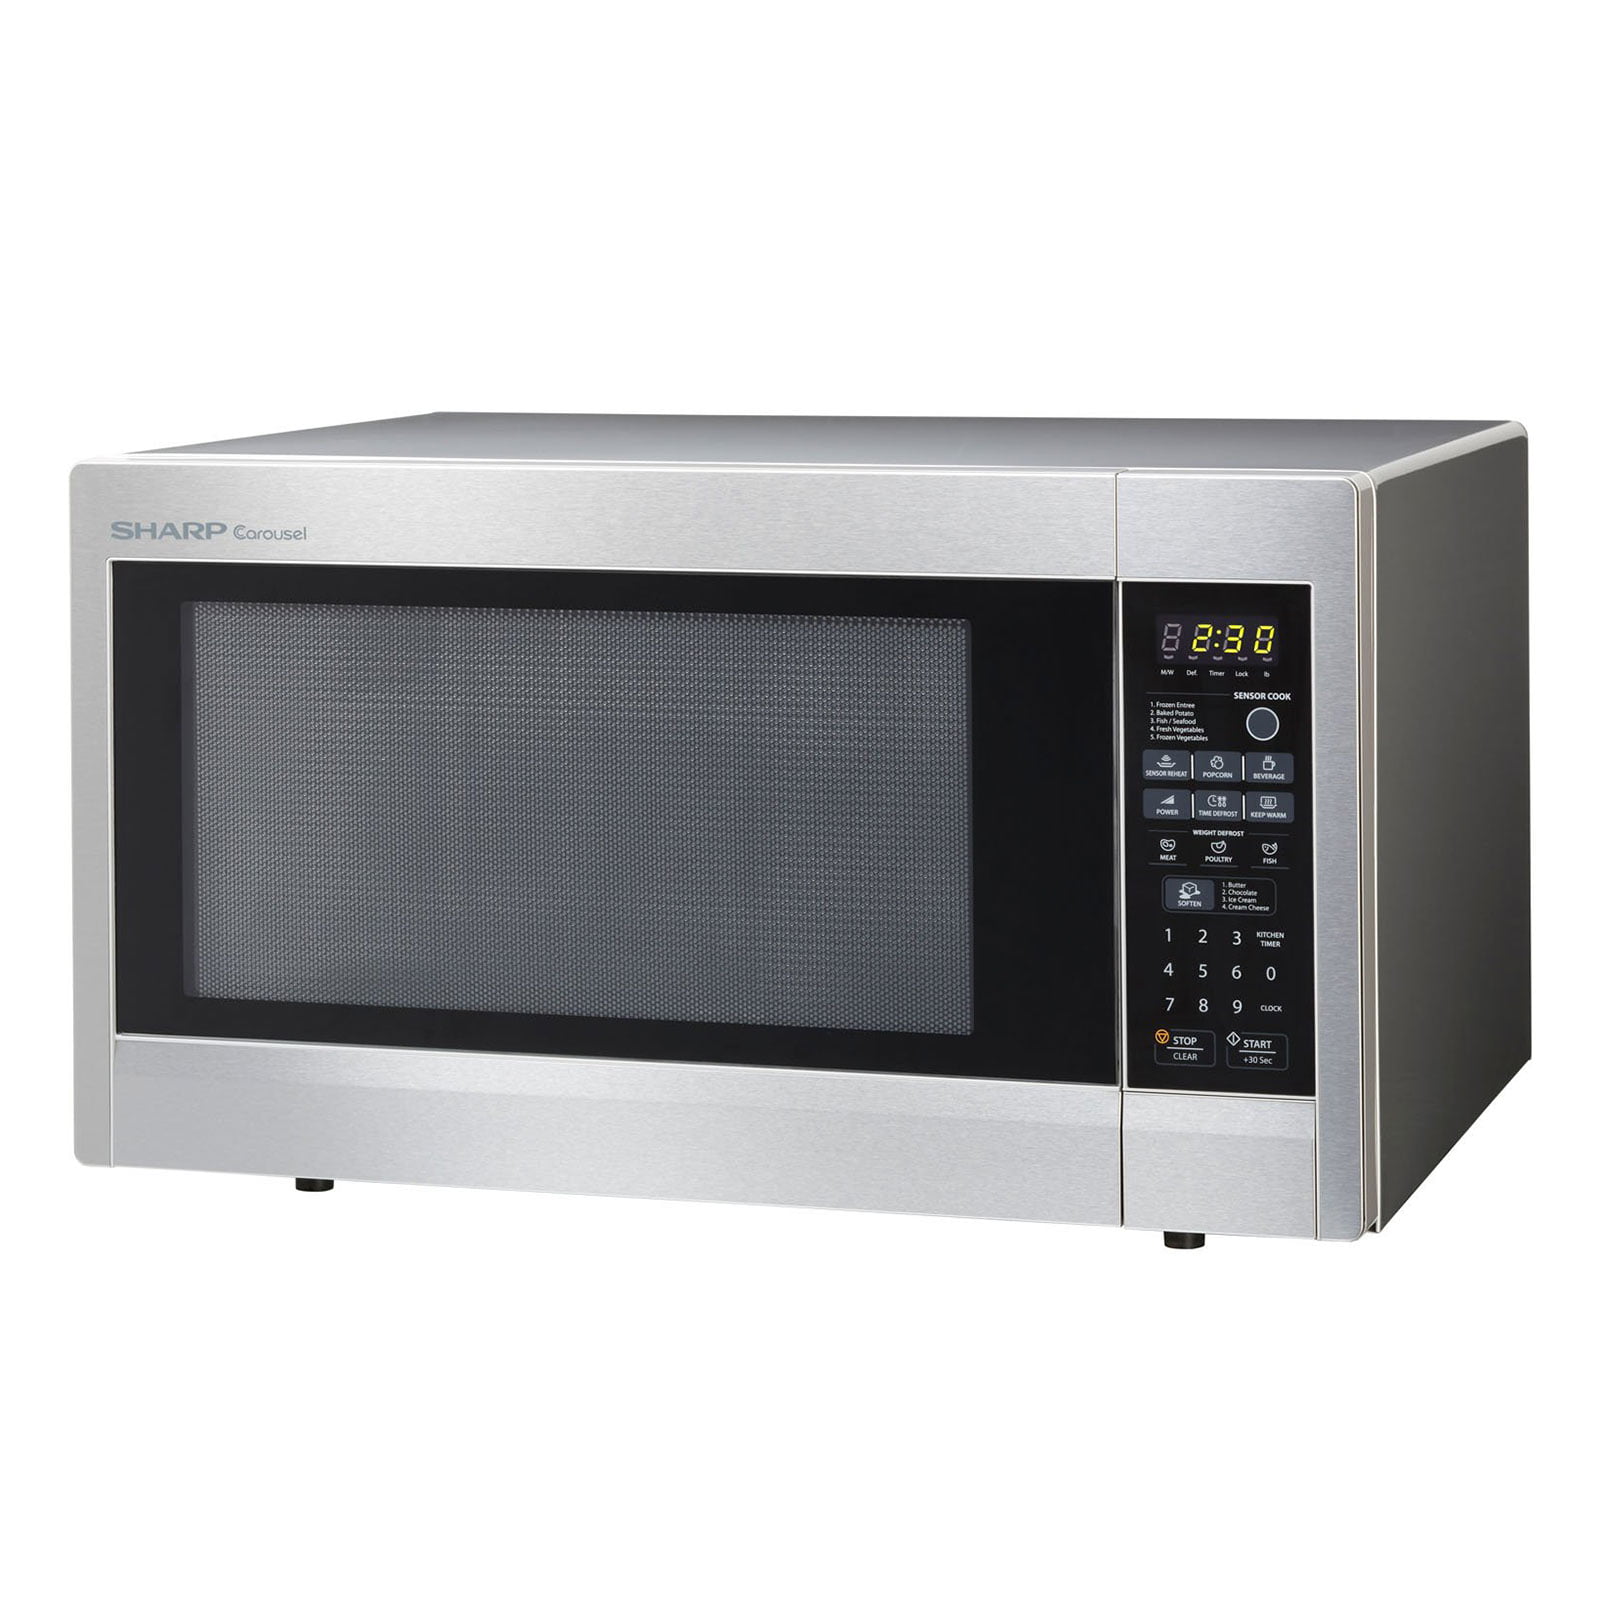 Sharp 1200 Watt Carousel Countertop Microwave Oven (Refurbished